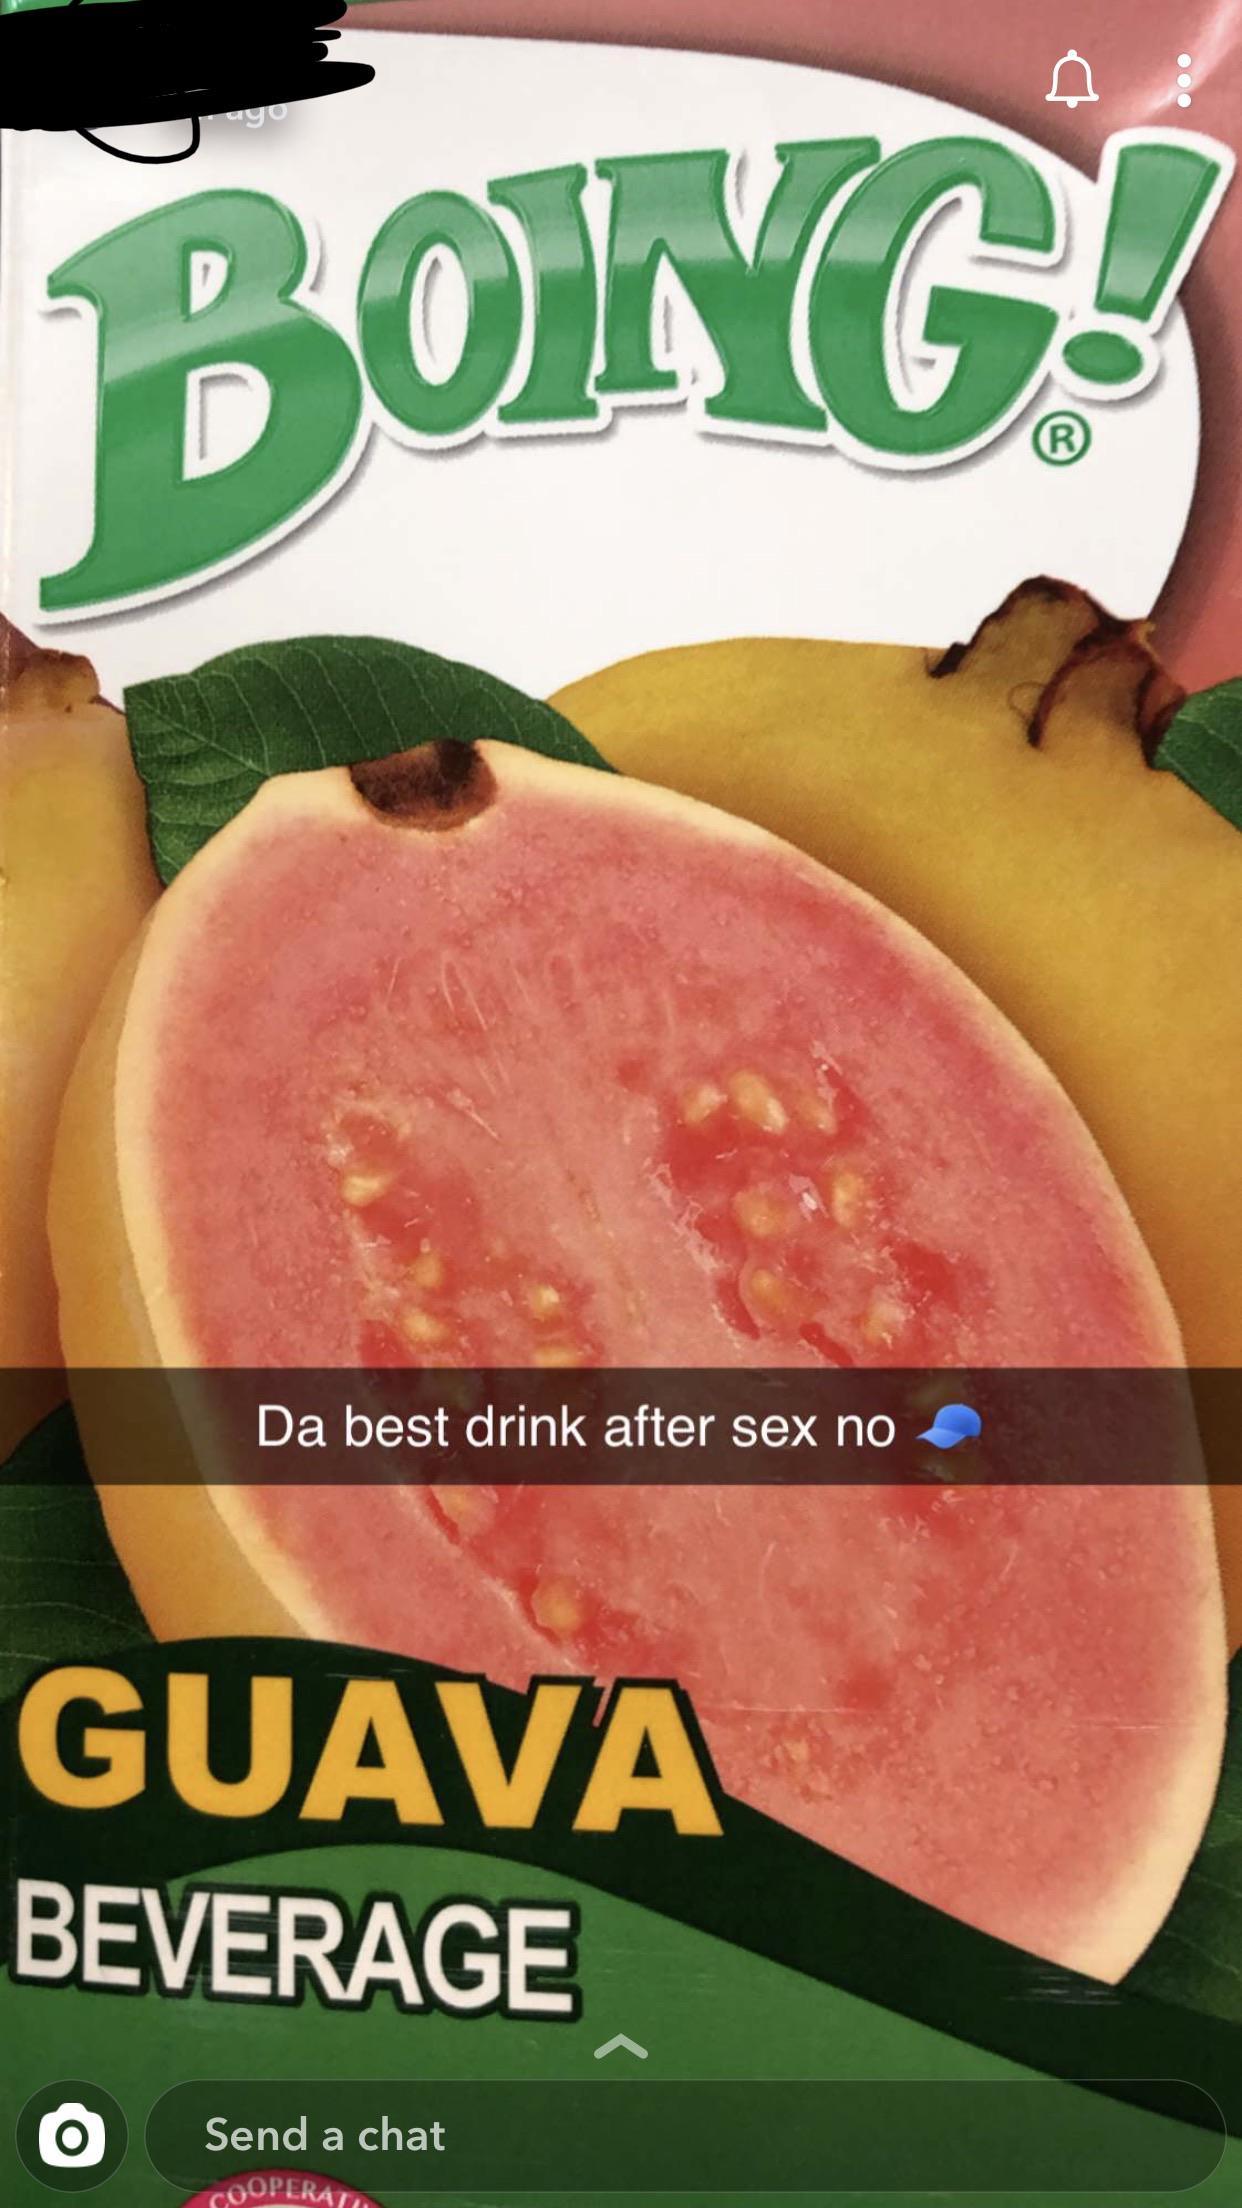 watermelon - Bong Da best drink after sex no a Guava Beverage Send a chat Cooperat